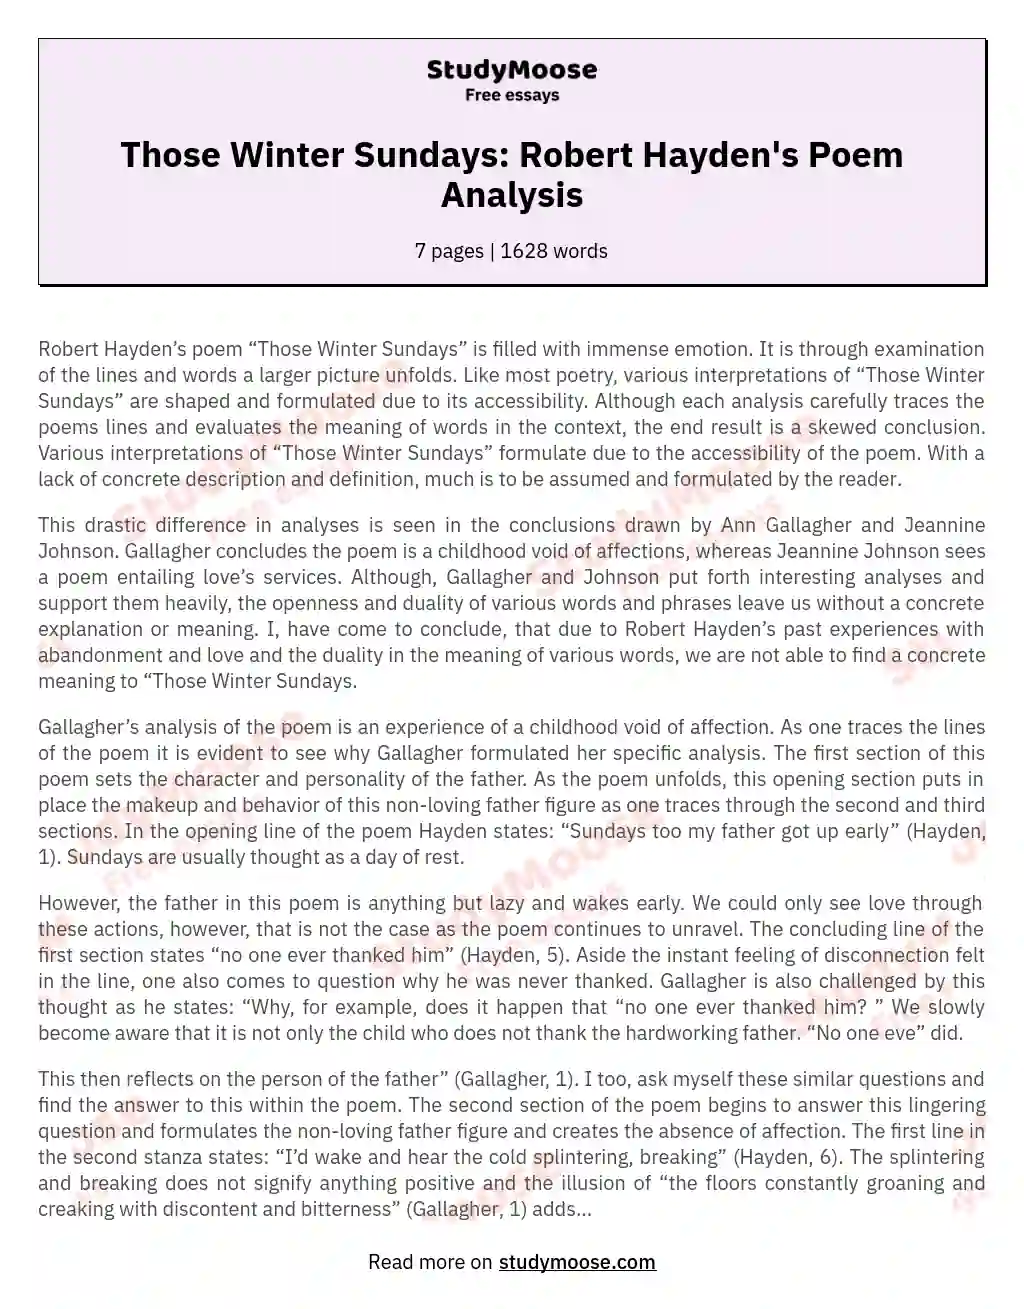 Those Winter Sundays: Robert Hayden's Poem Analysis essay